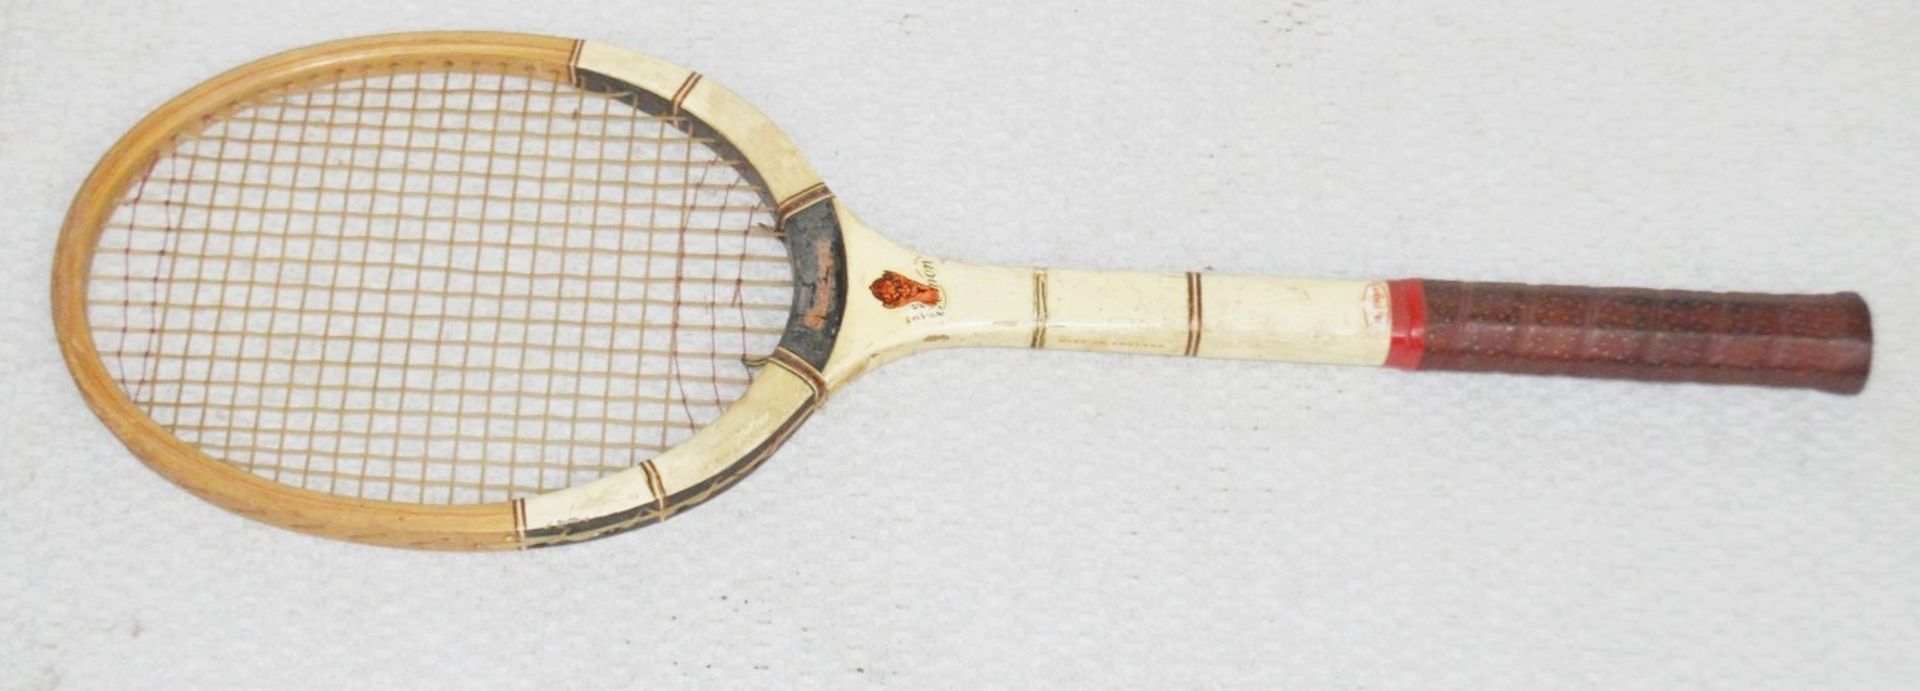 5 x Assorted Vintage Tennis Rackets - Ex-Display Props - Average Length: 69cm - Ref: HAR243 GIT - - Image 6 of 12